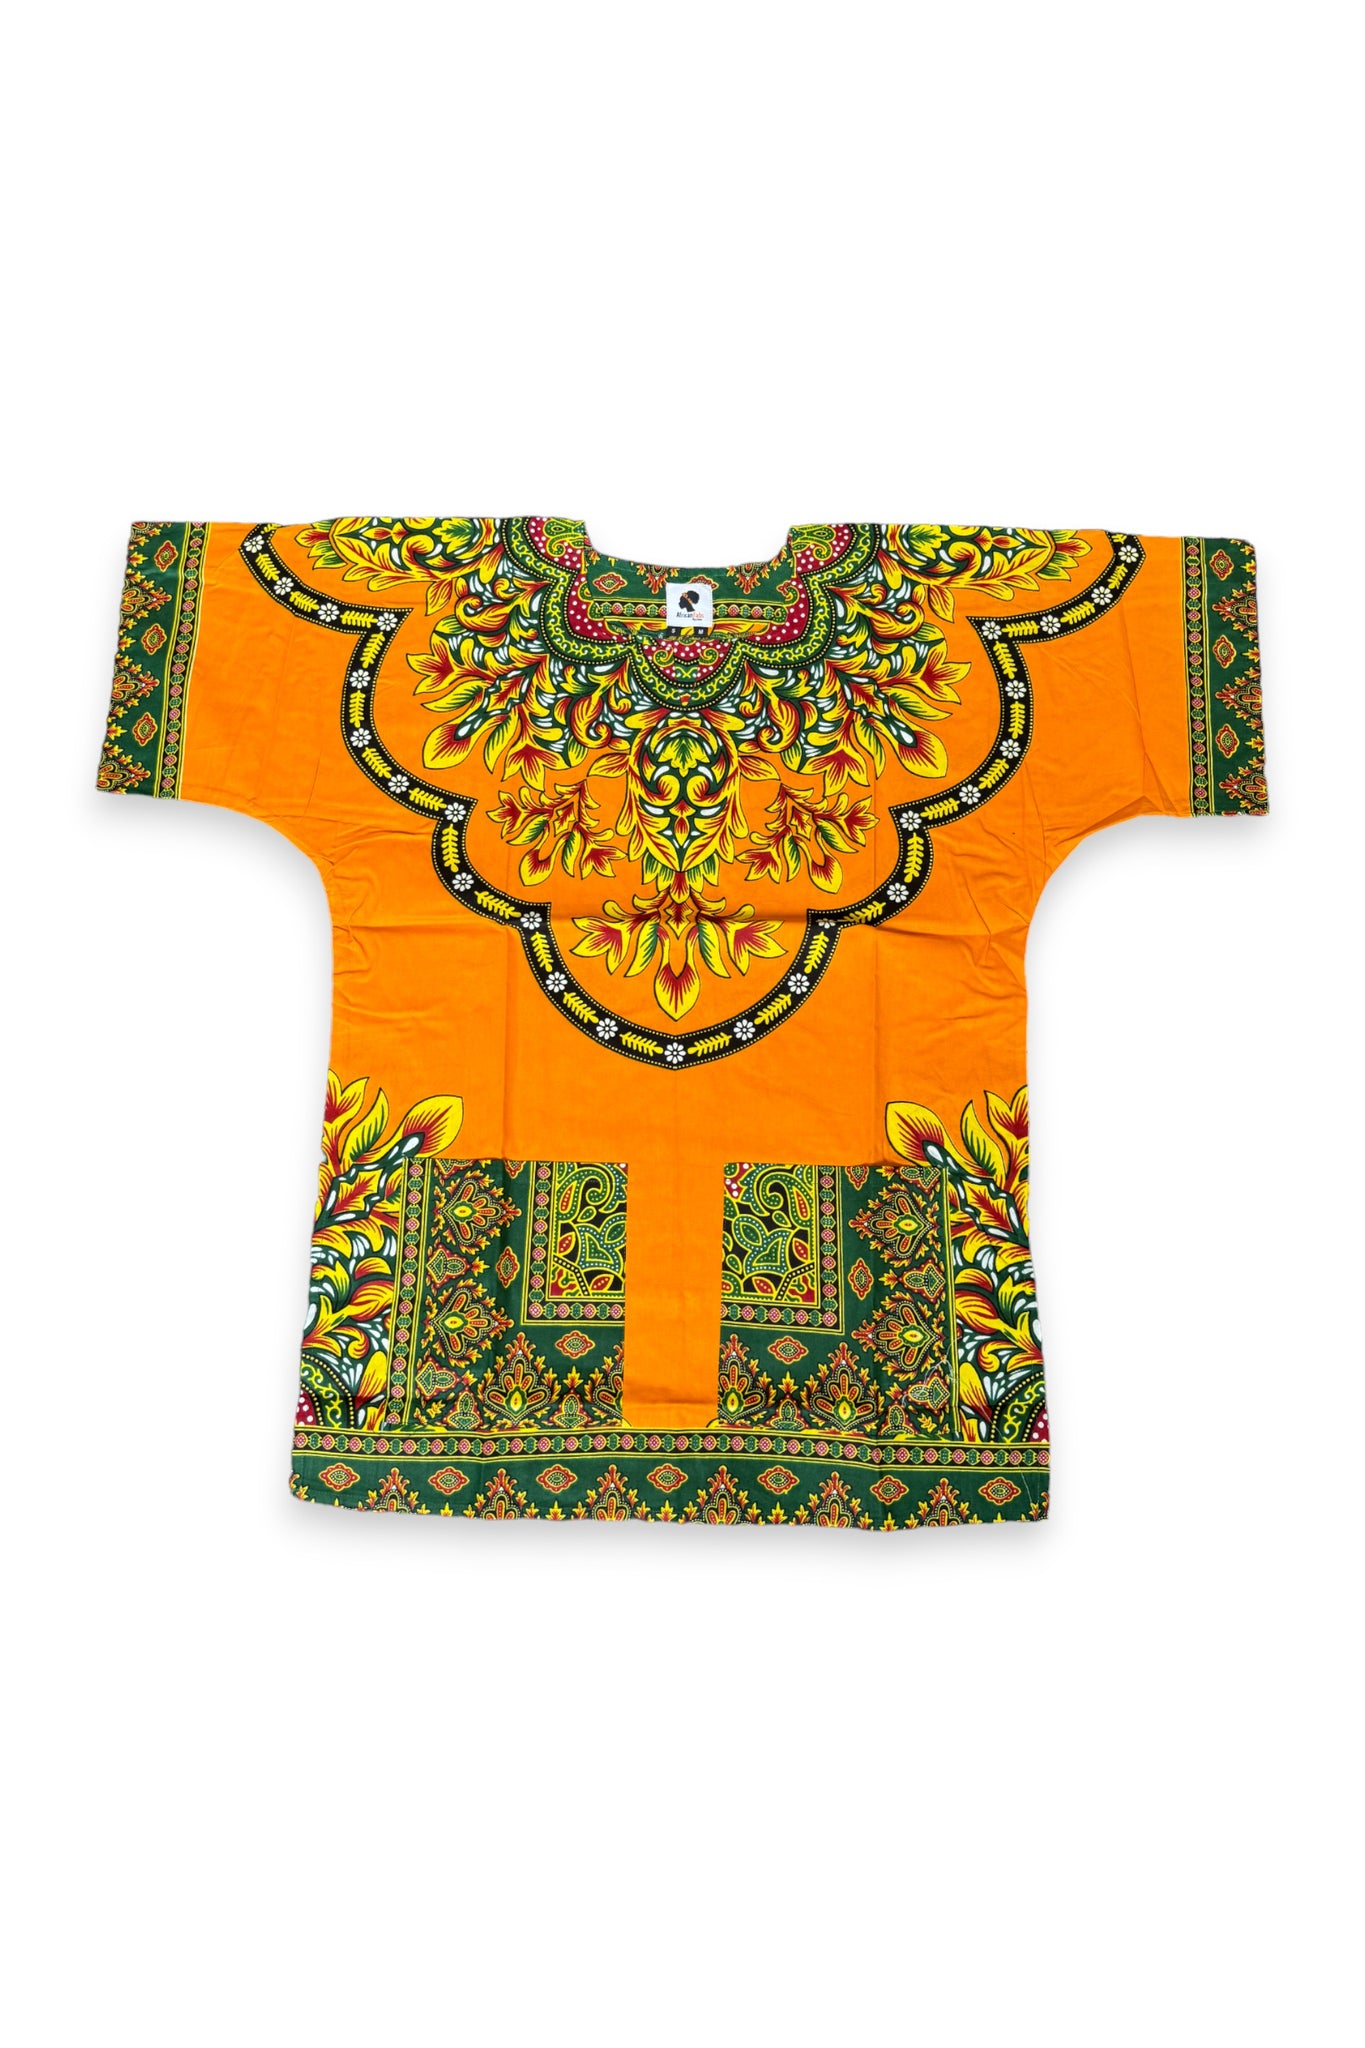 Oranje Dashiki Shirt / Dashiki Jurk - Afrikaans shirt - Unisex